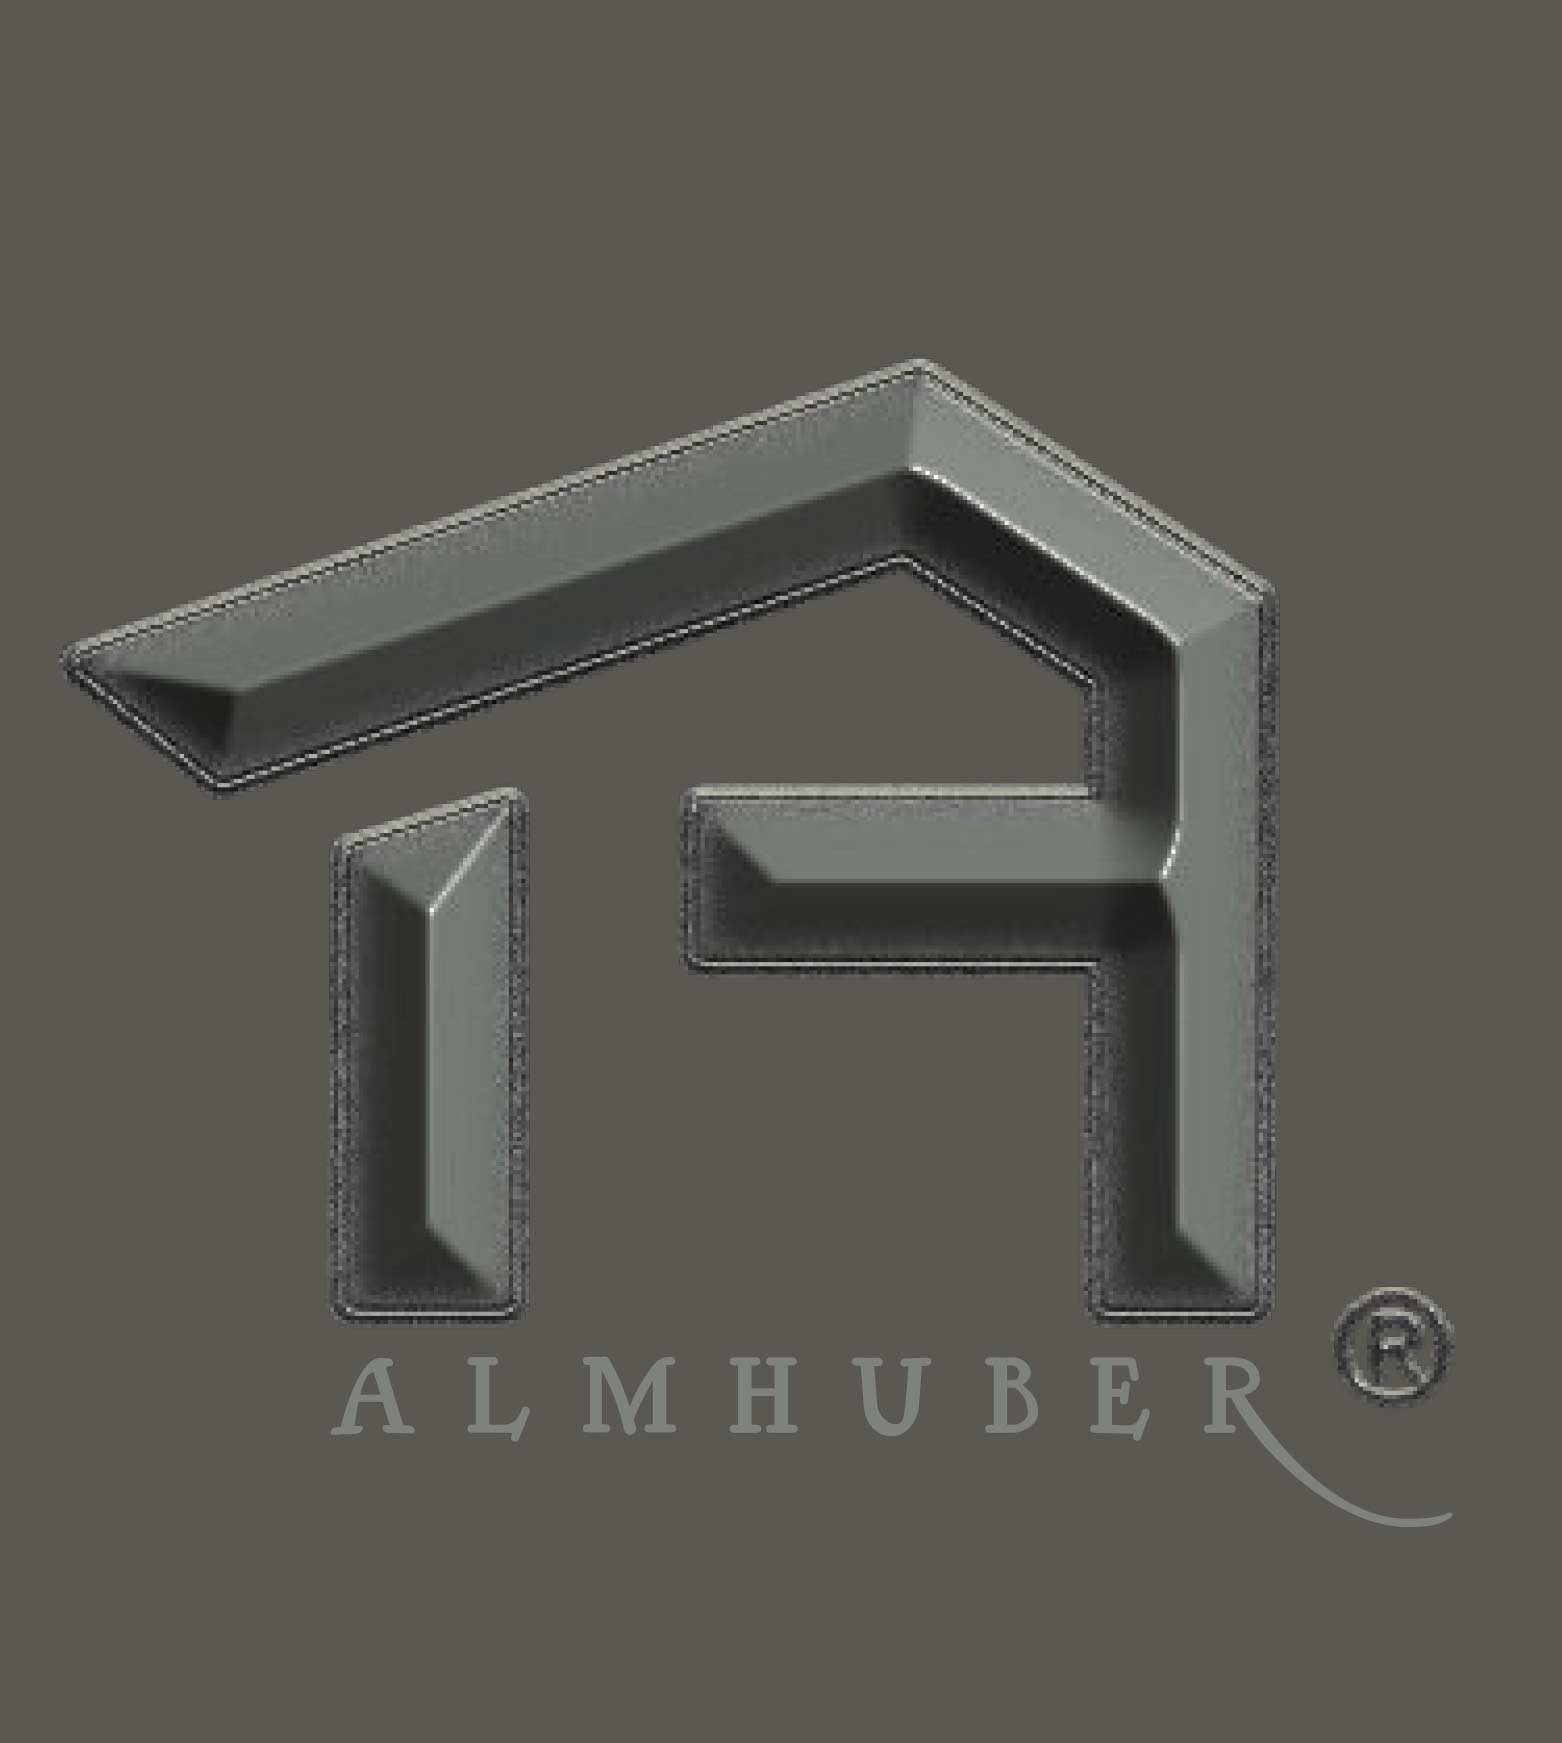 ALMHUBER